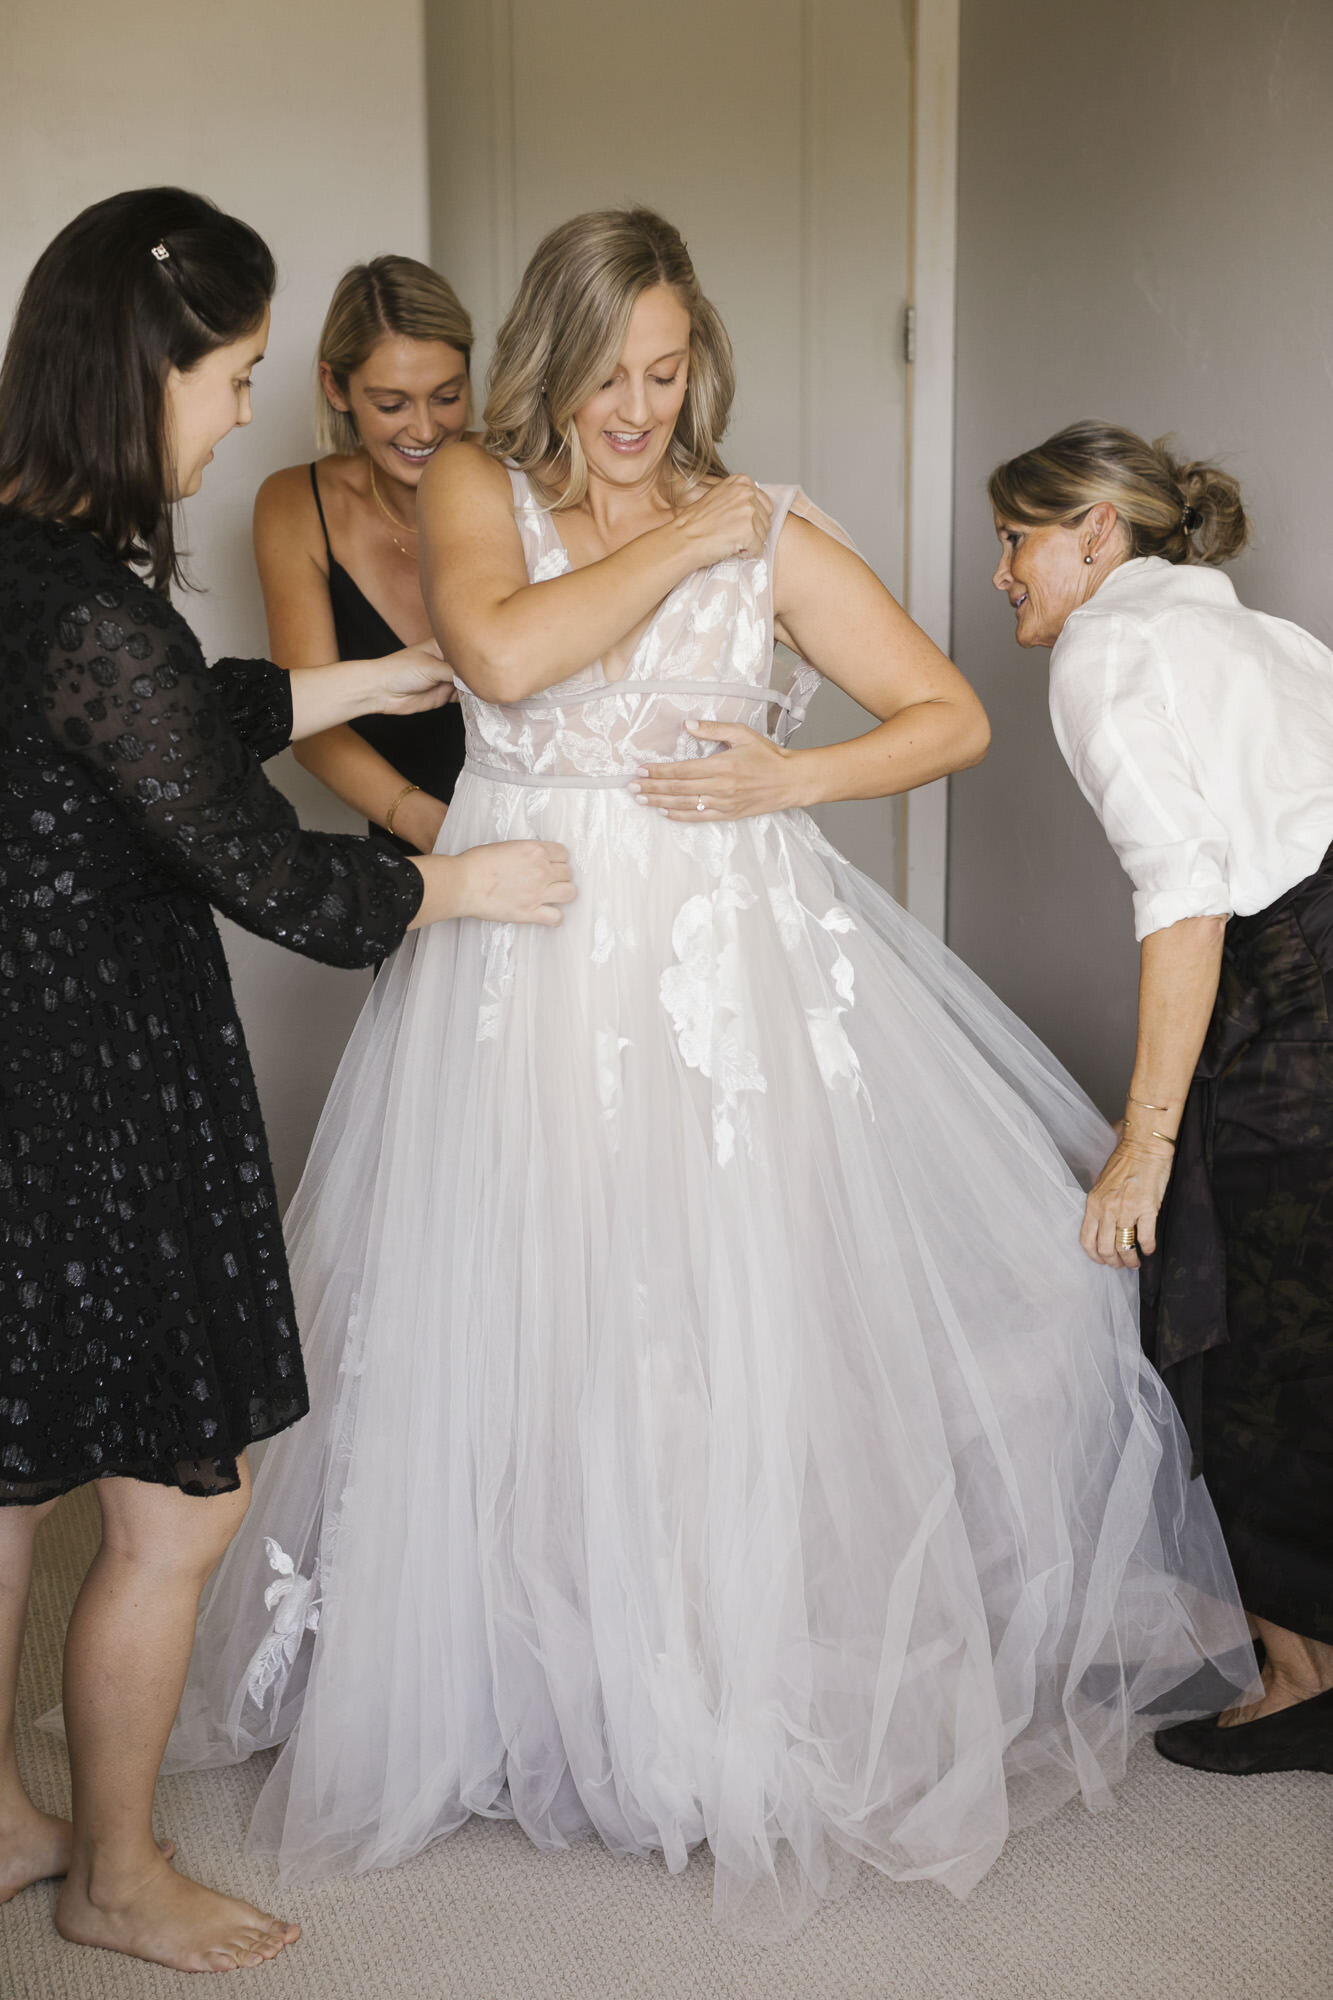 Utah bride getting into her BHLDN wedding dress